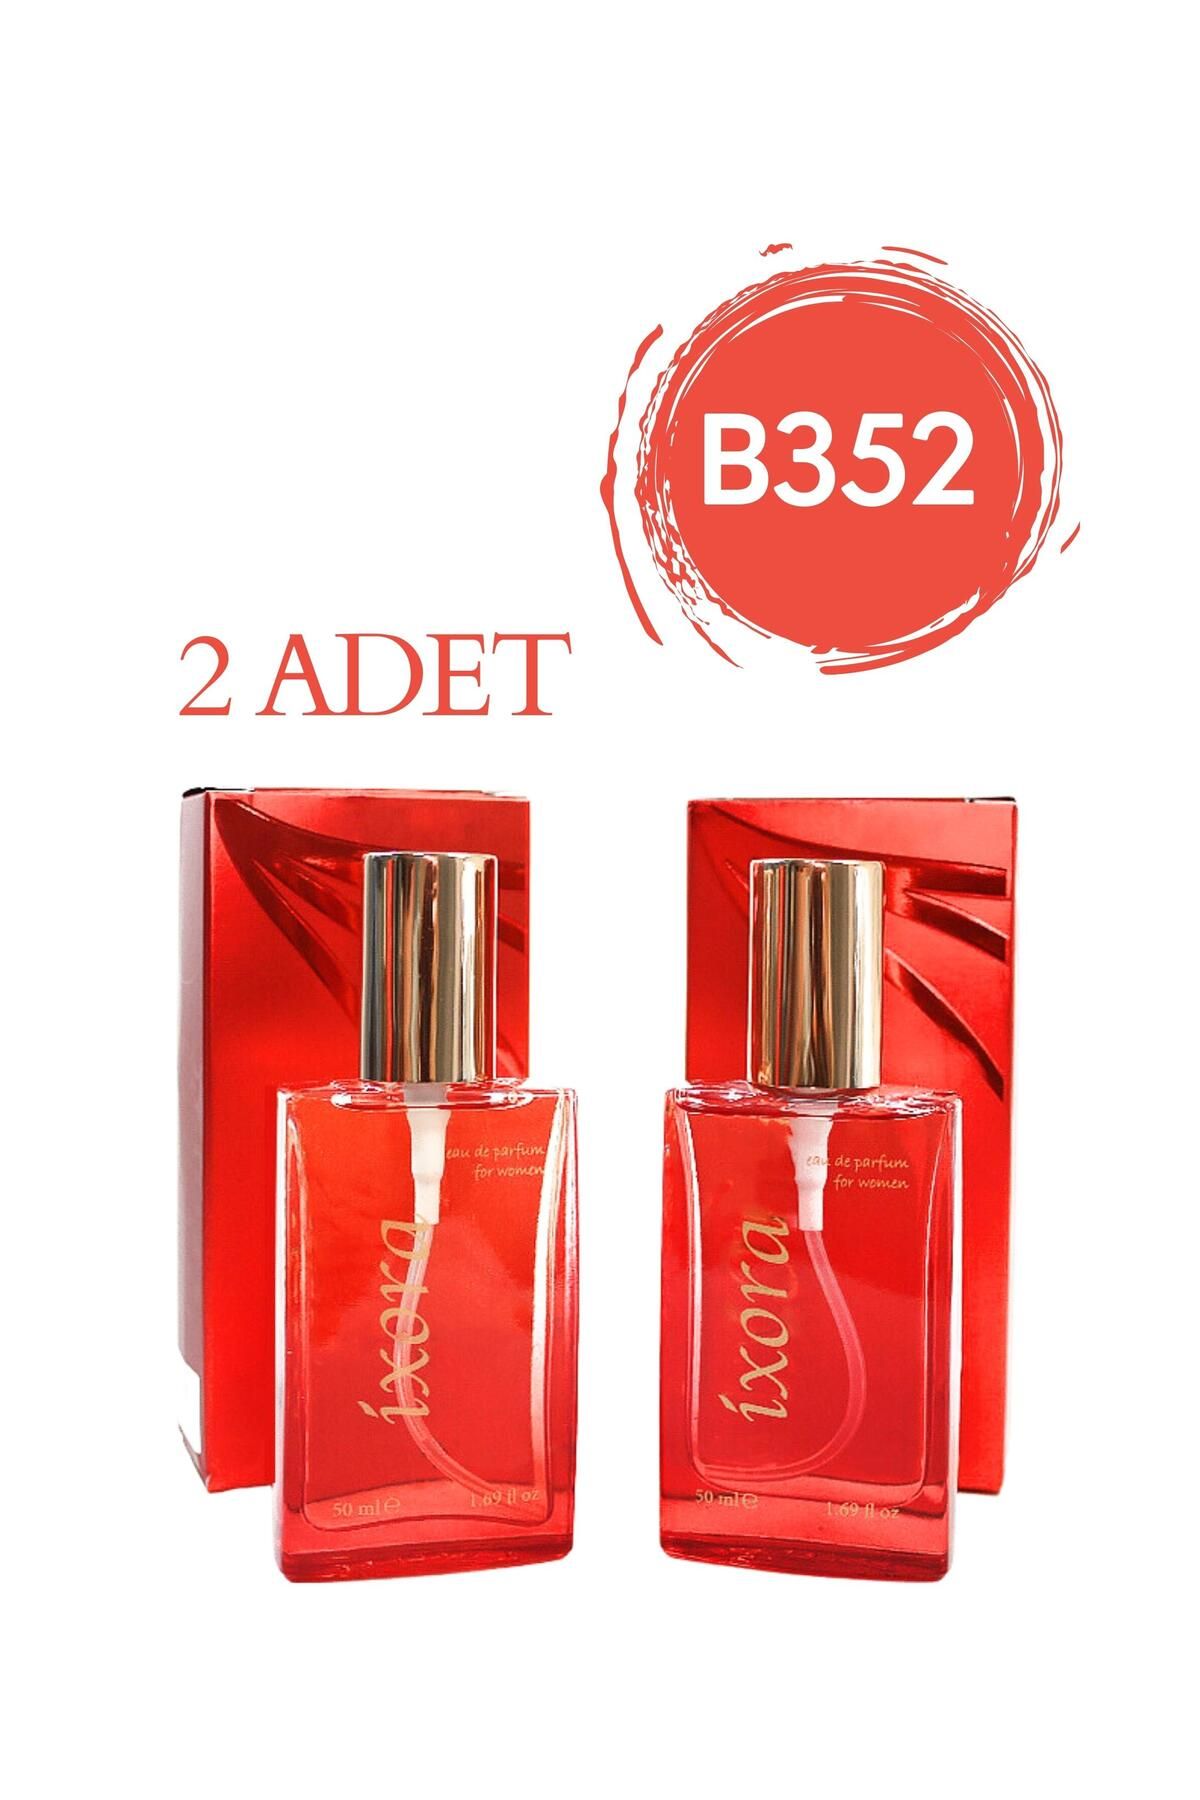 Ixora B352x2 (2 adet ) Kadın Parfüm Stiletto 50 ml Edp